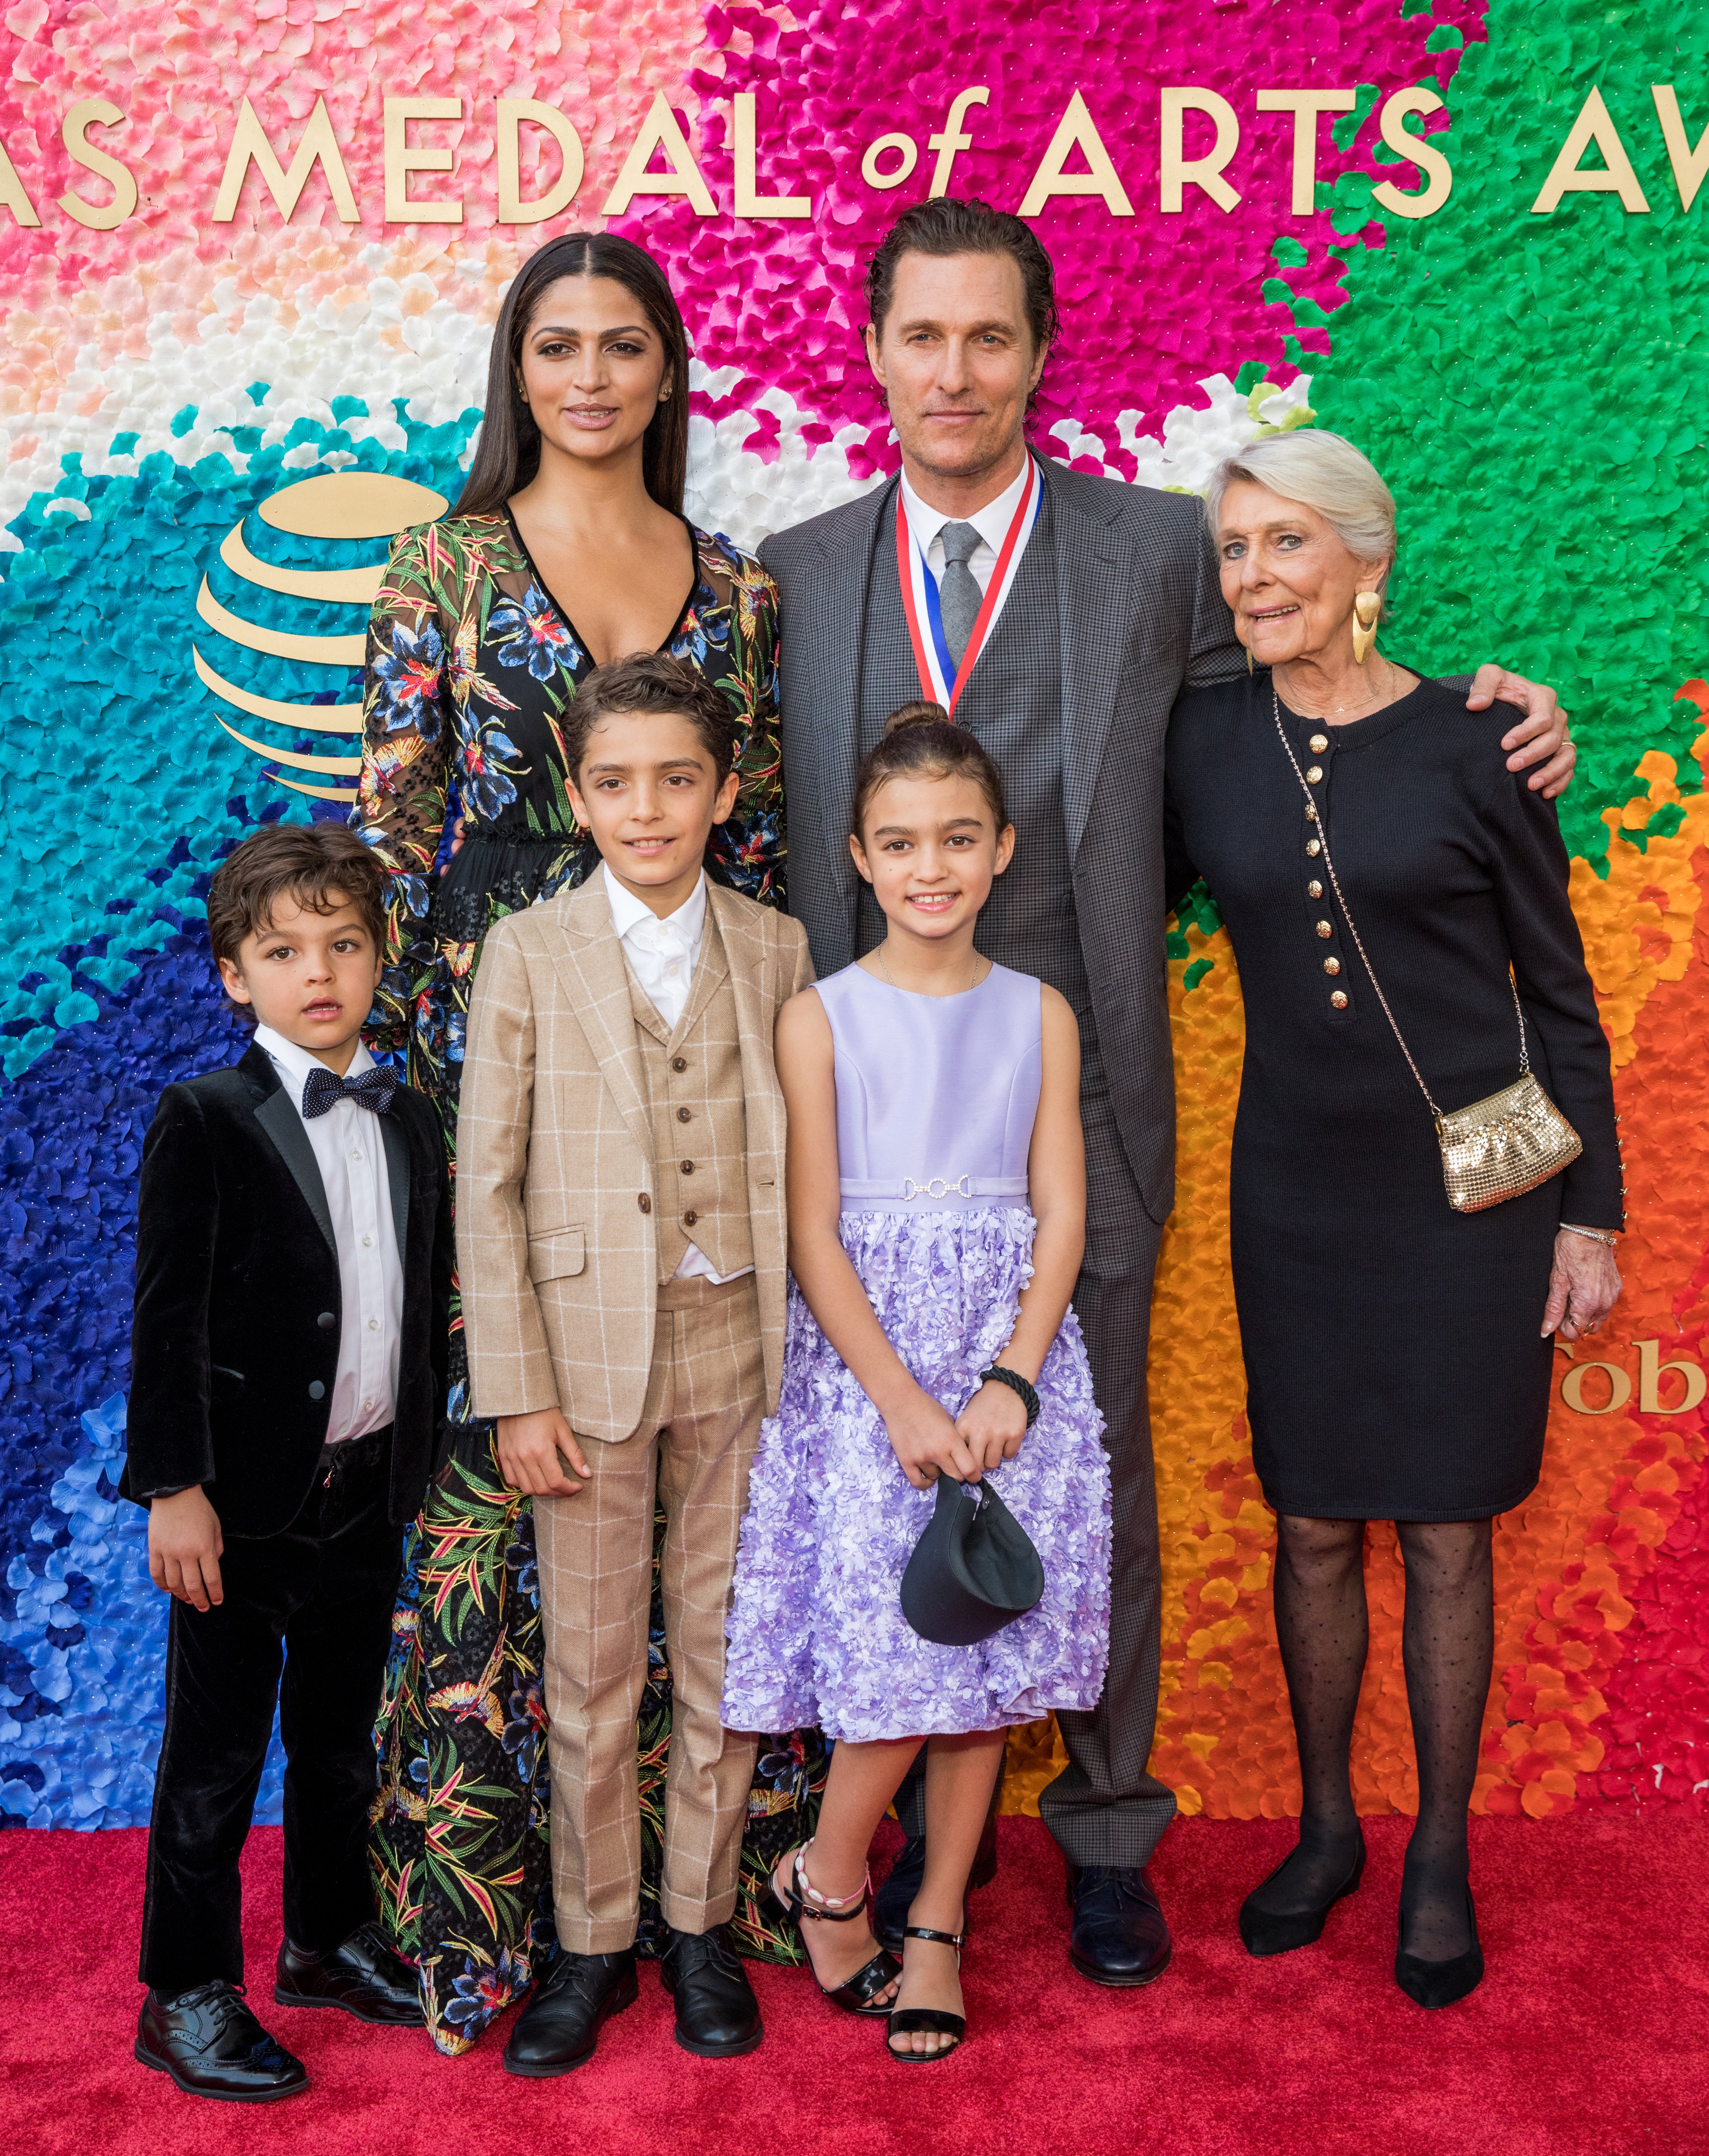 Livingston Alves McConaughey, Camila Alves, Levi Alves McConaughey, ödül sahibi Matthew McConaughey, Vida Alves McConaughey ve Kay McConaughey, 27 Şubat 2019'da Austin, Teksas'ta Long Center for the Performing Arts'ta düzenlenen 2019 Texas Medal Of Arts Ödüllerine katıldı |  Kaynak: Getty Images 